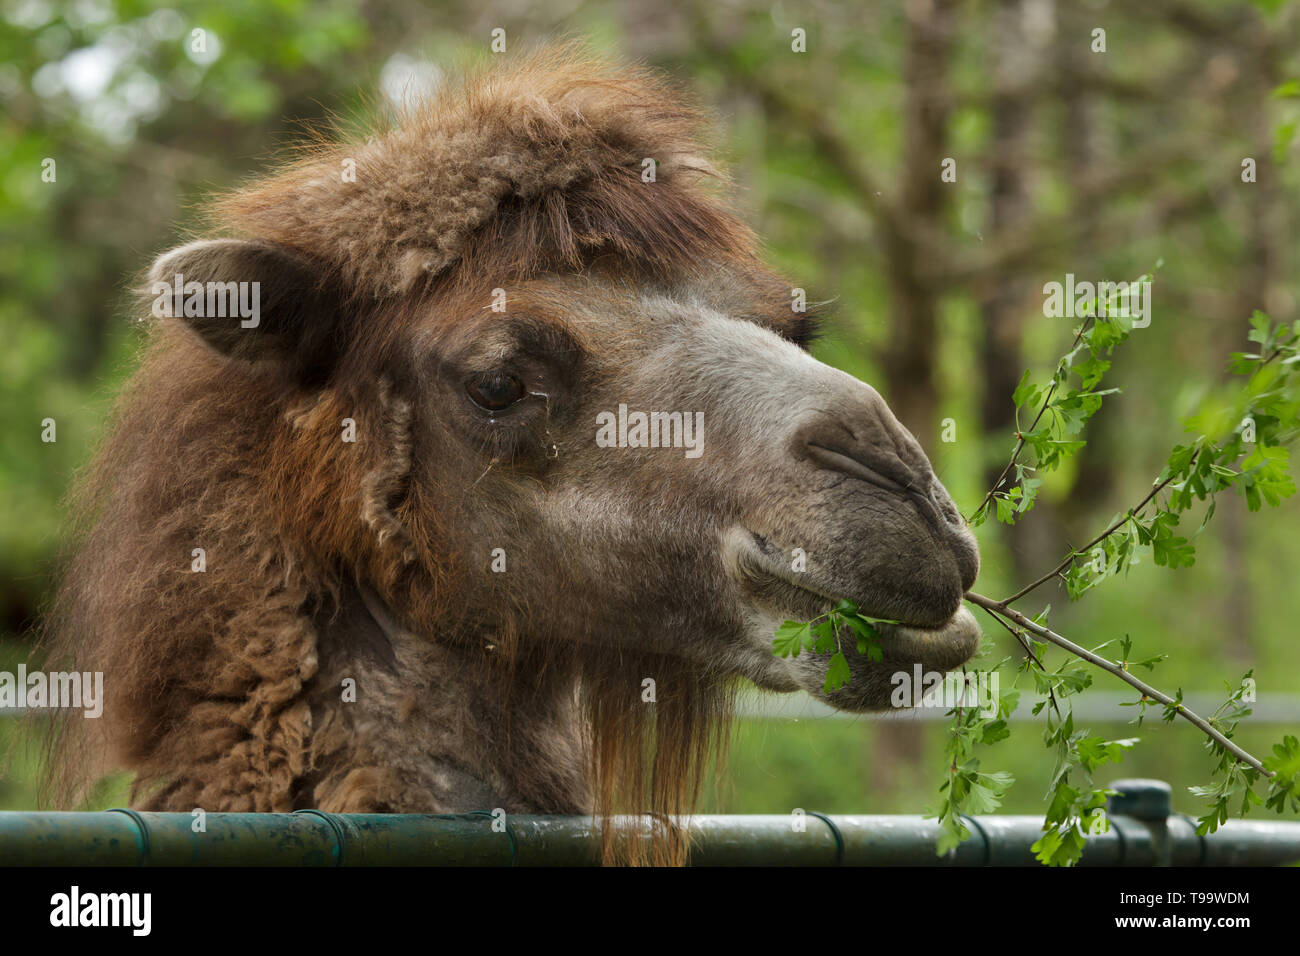 Camello bactriano (Camelus bactrianus). Animal domesticado. Foto de stock